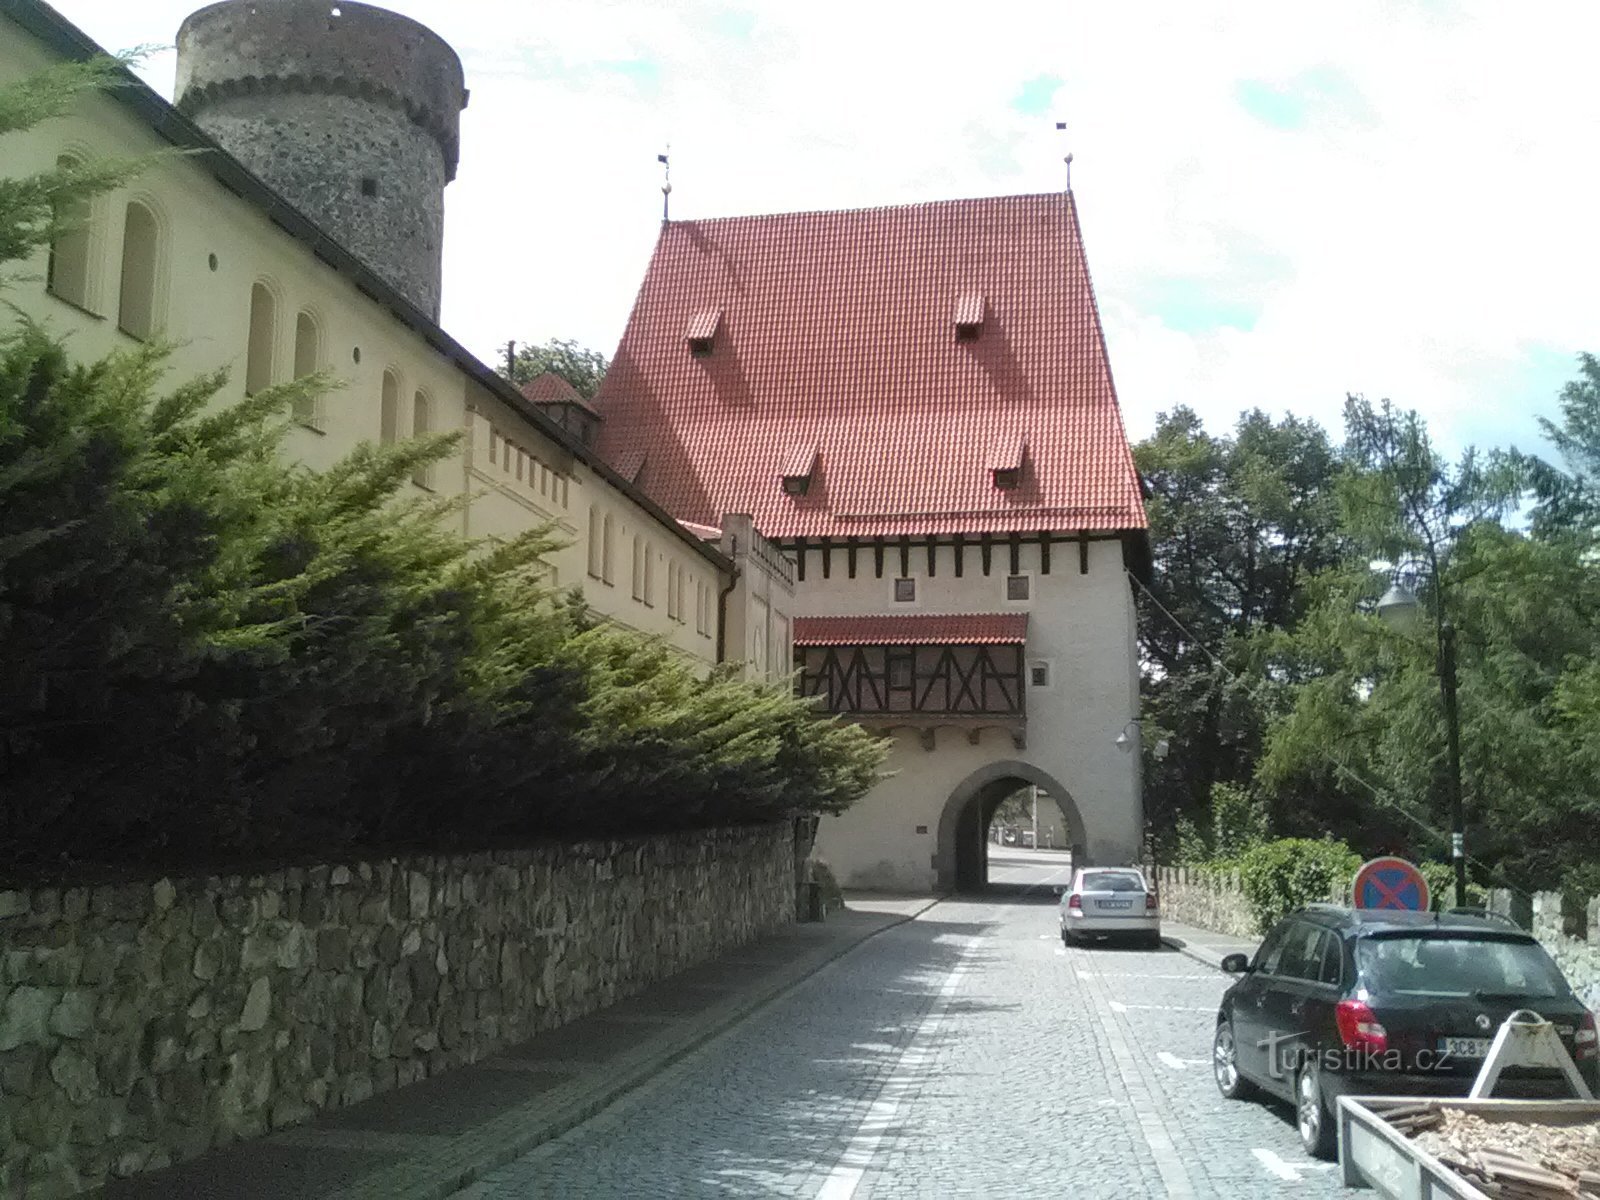 Bechynská gate and Kotnov tower